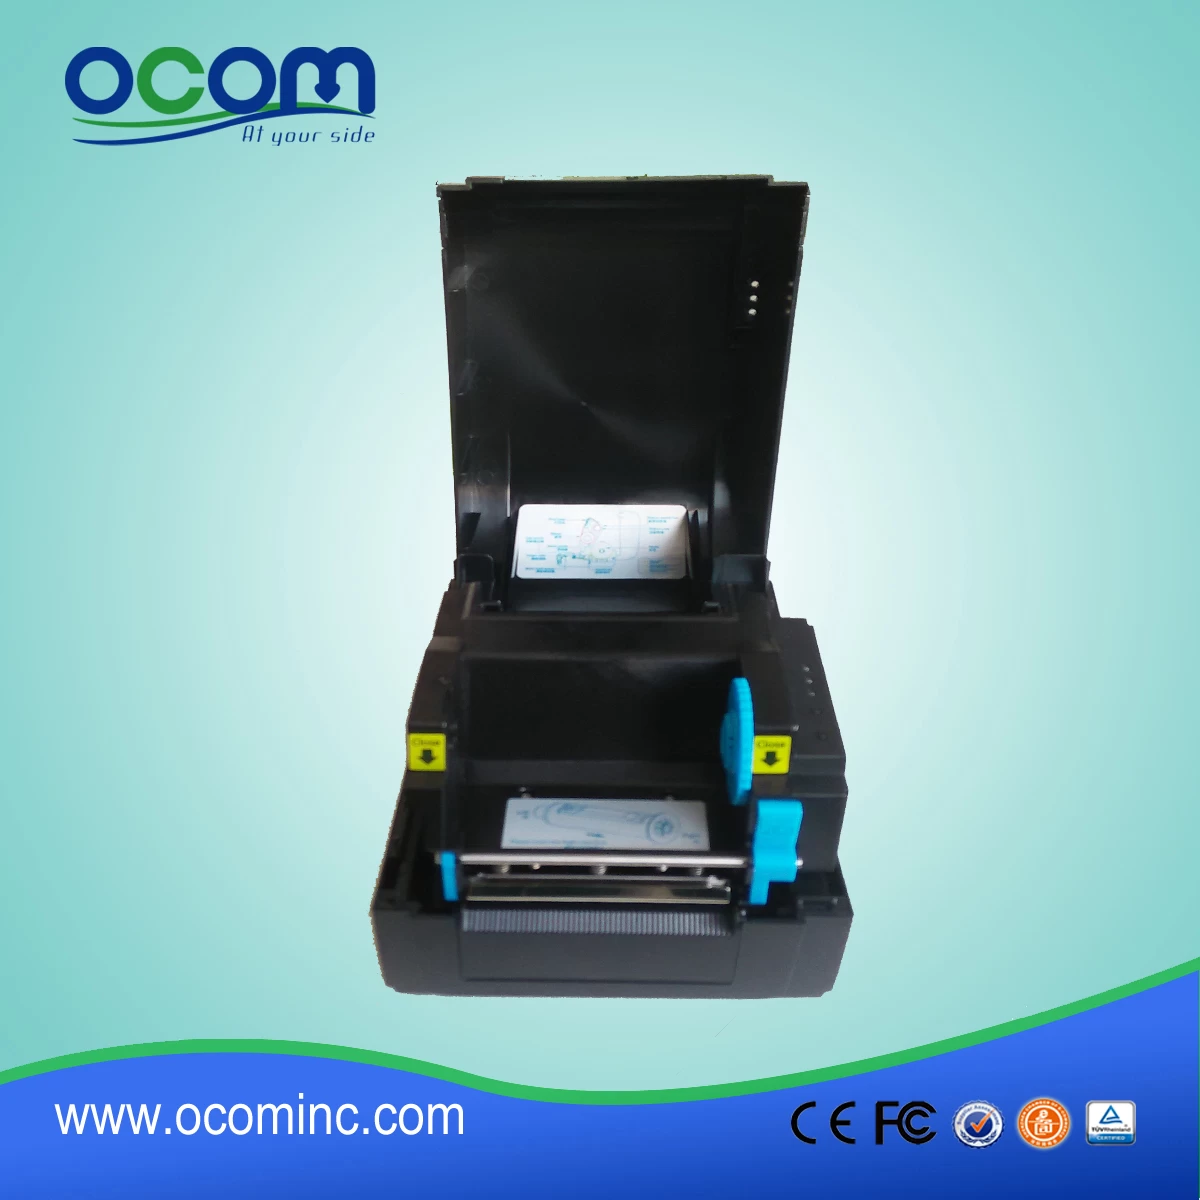 Thermal Transfer and Direct Thermal Barcode Label Printer(OCBP-003 )